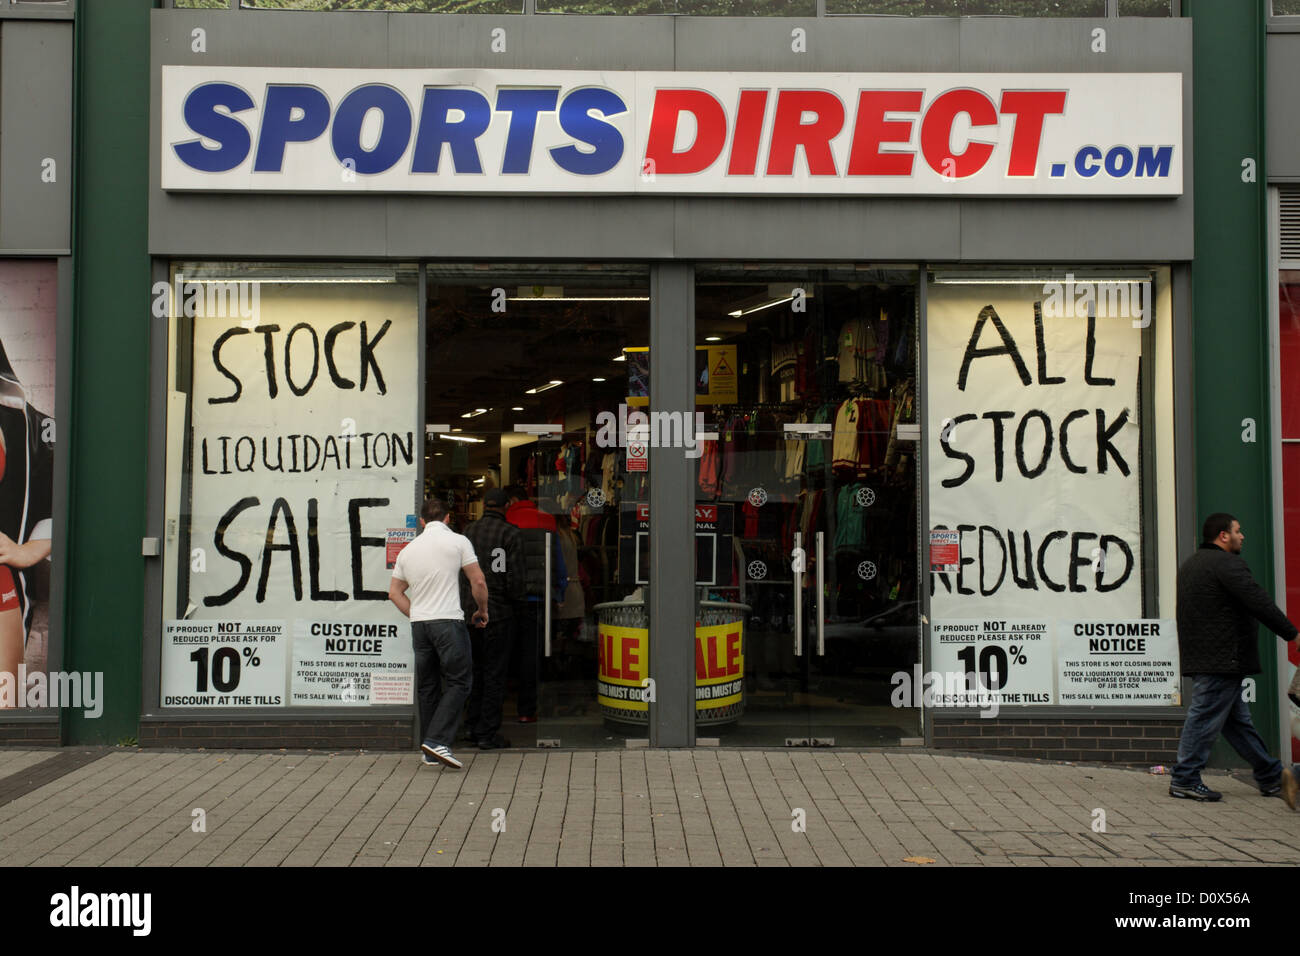 Sports Direct retail shop showing signs wicih say 'stock liquidation sale' Birmingham UK Stock Photo